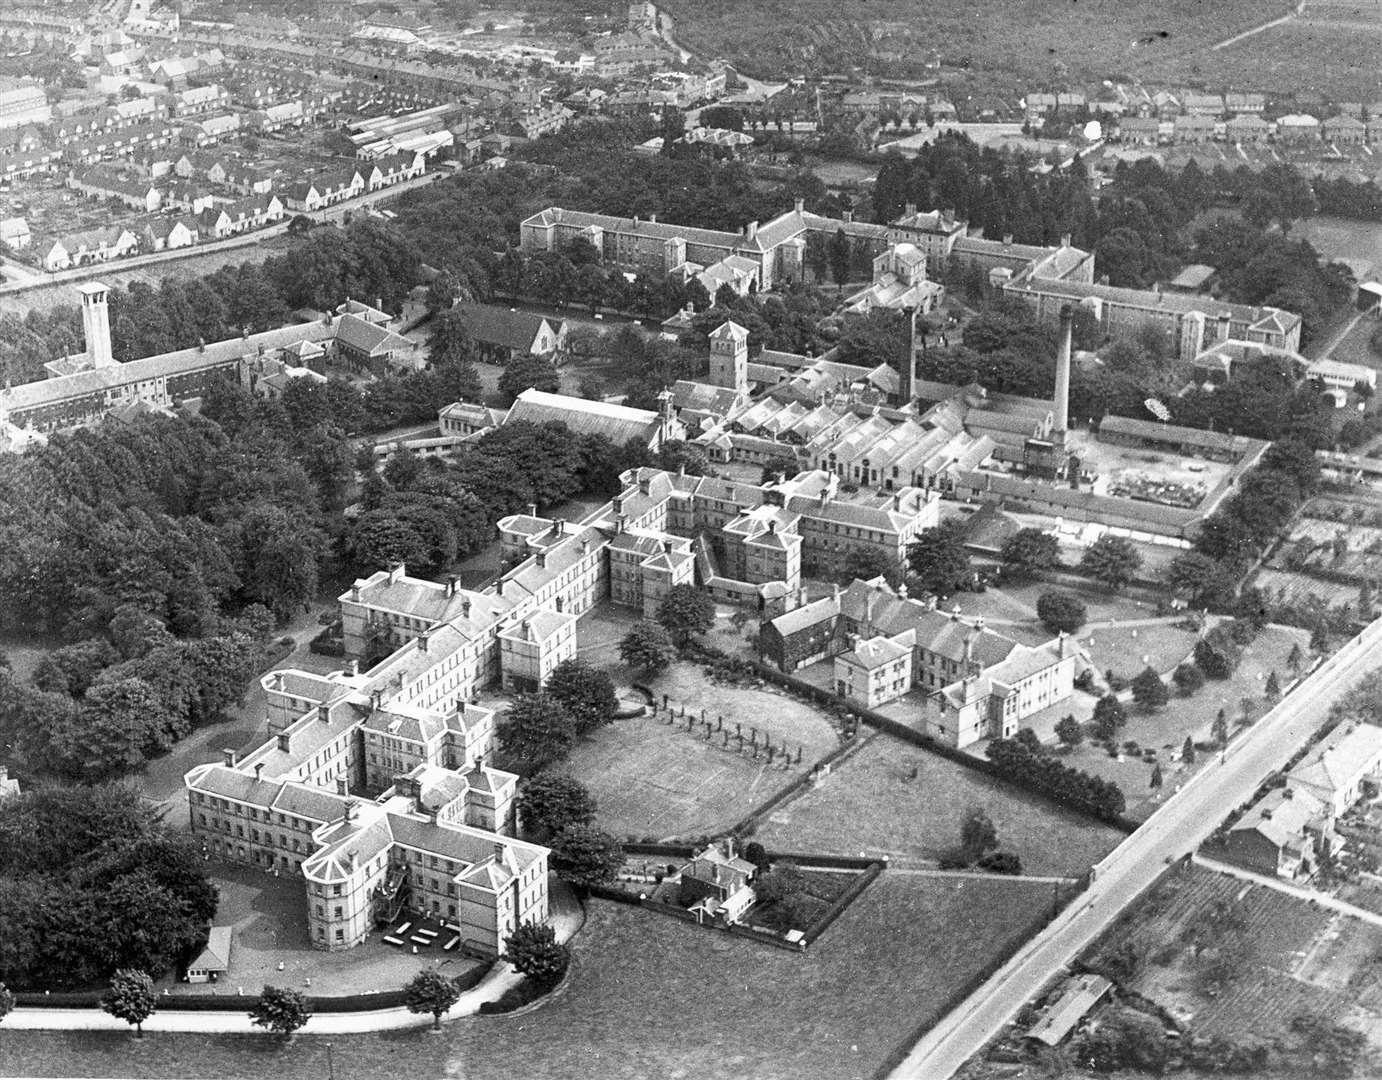 An aerial view of Oakwood Hospital taken in 1934